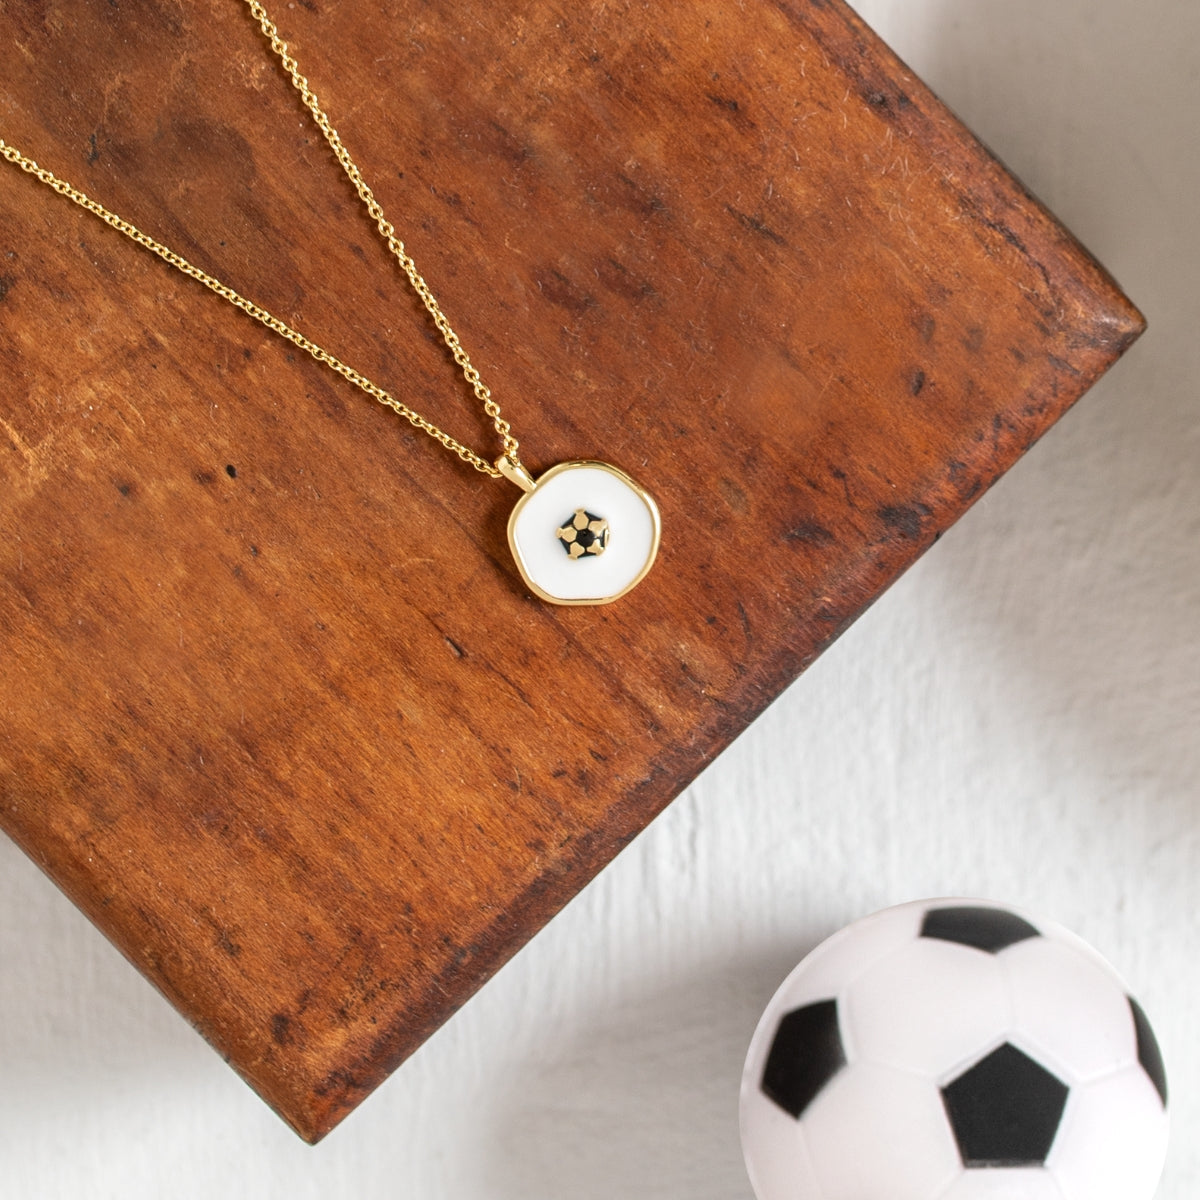 10k Gold Soccer Ball Pendant Necklace